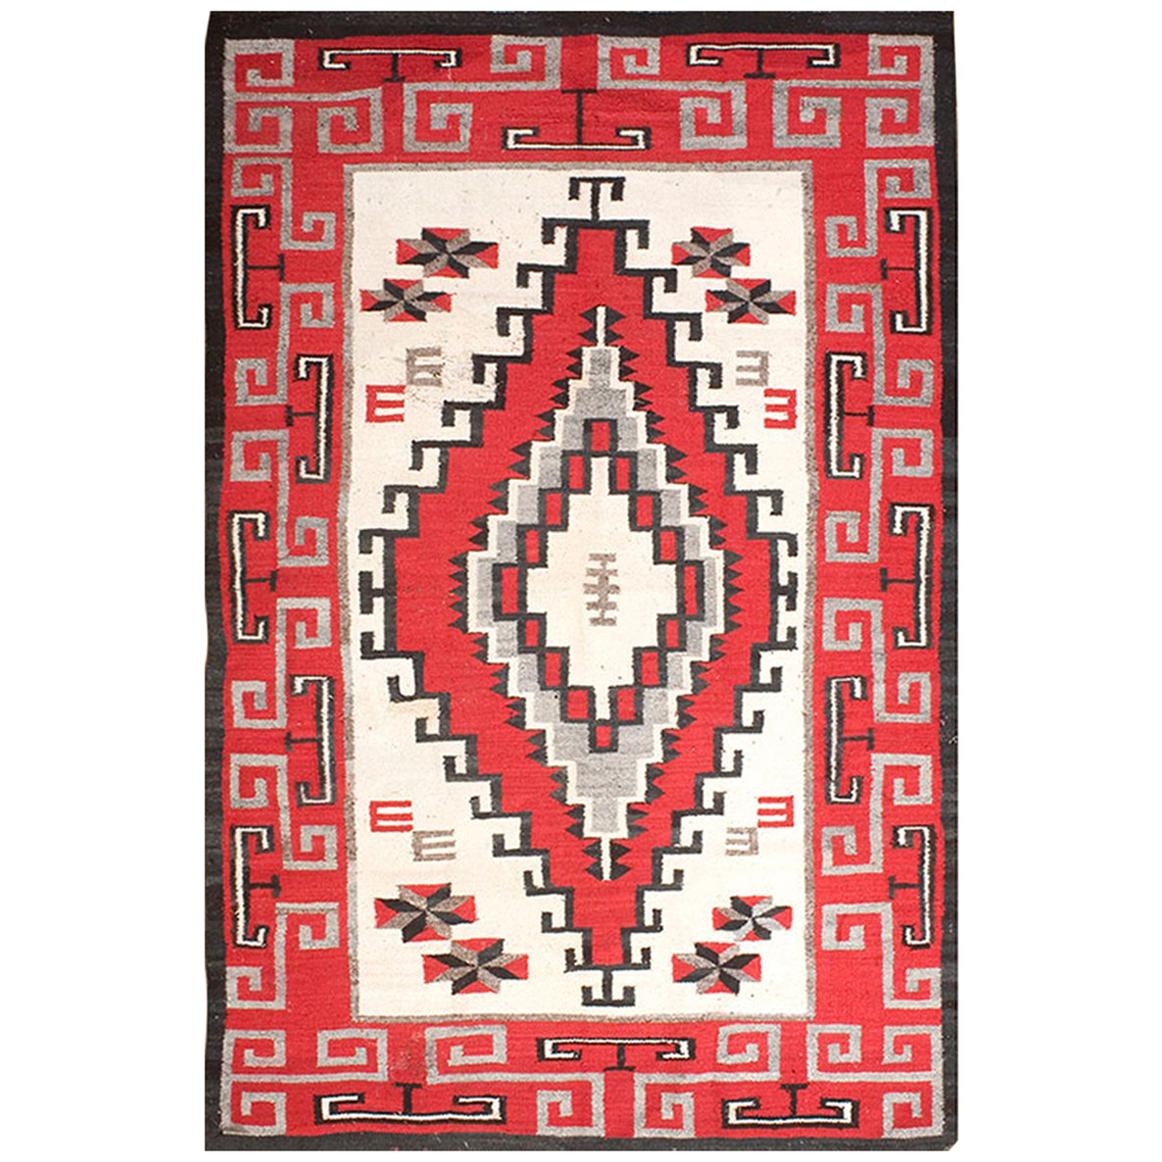 1930s American Navajo Ganado Carpet Carpet ( 5' x 7'5" - 152 x 226 )